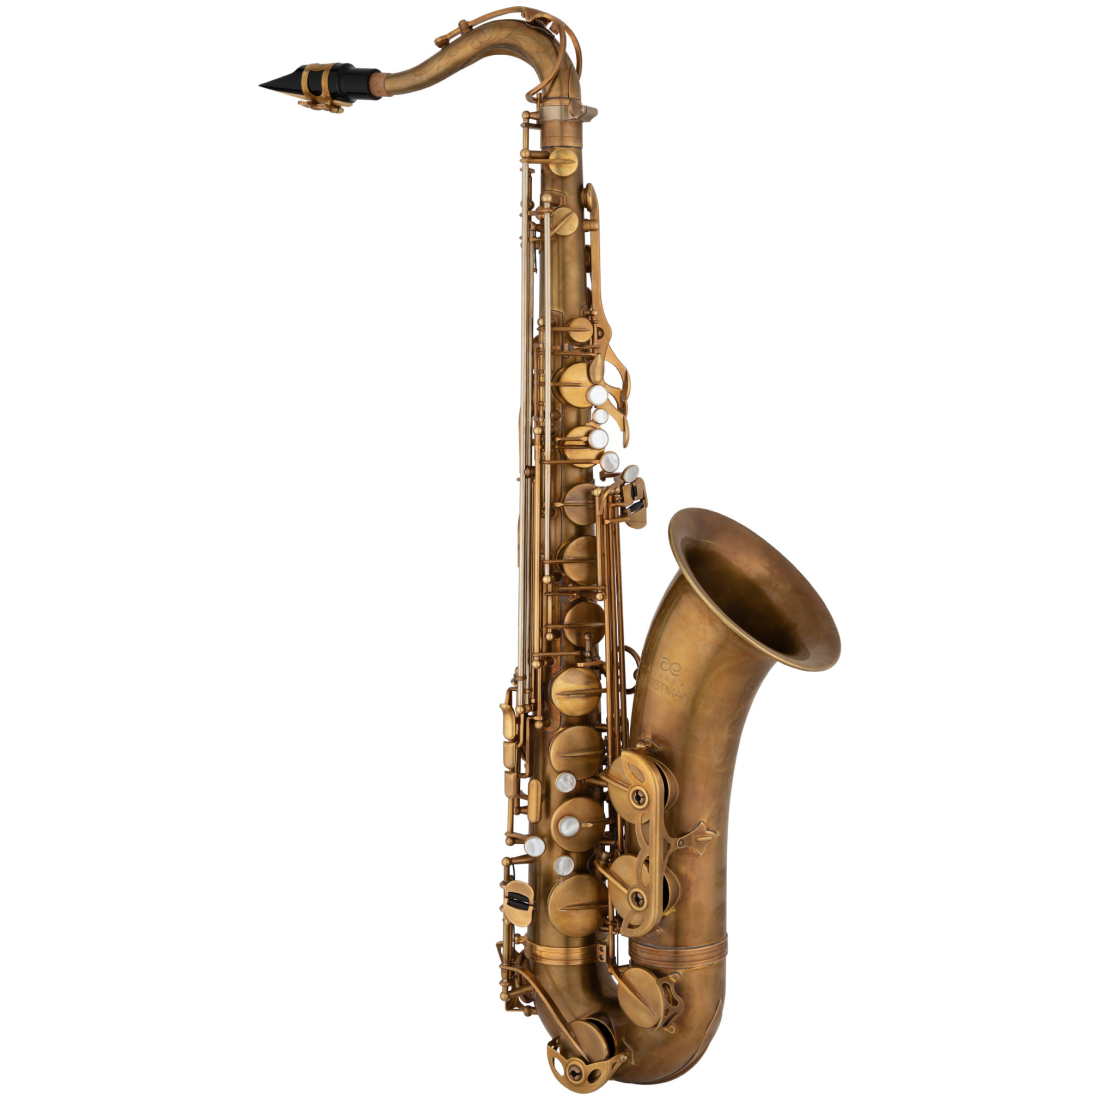 52nd Street Tenor Saxophone w/ High F# Key - Aged Unlacquered Brass